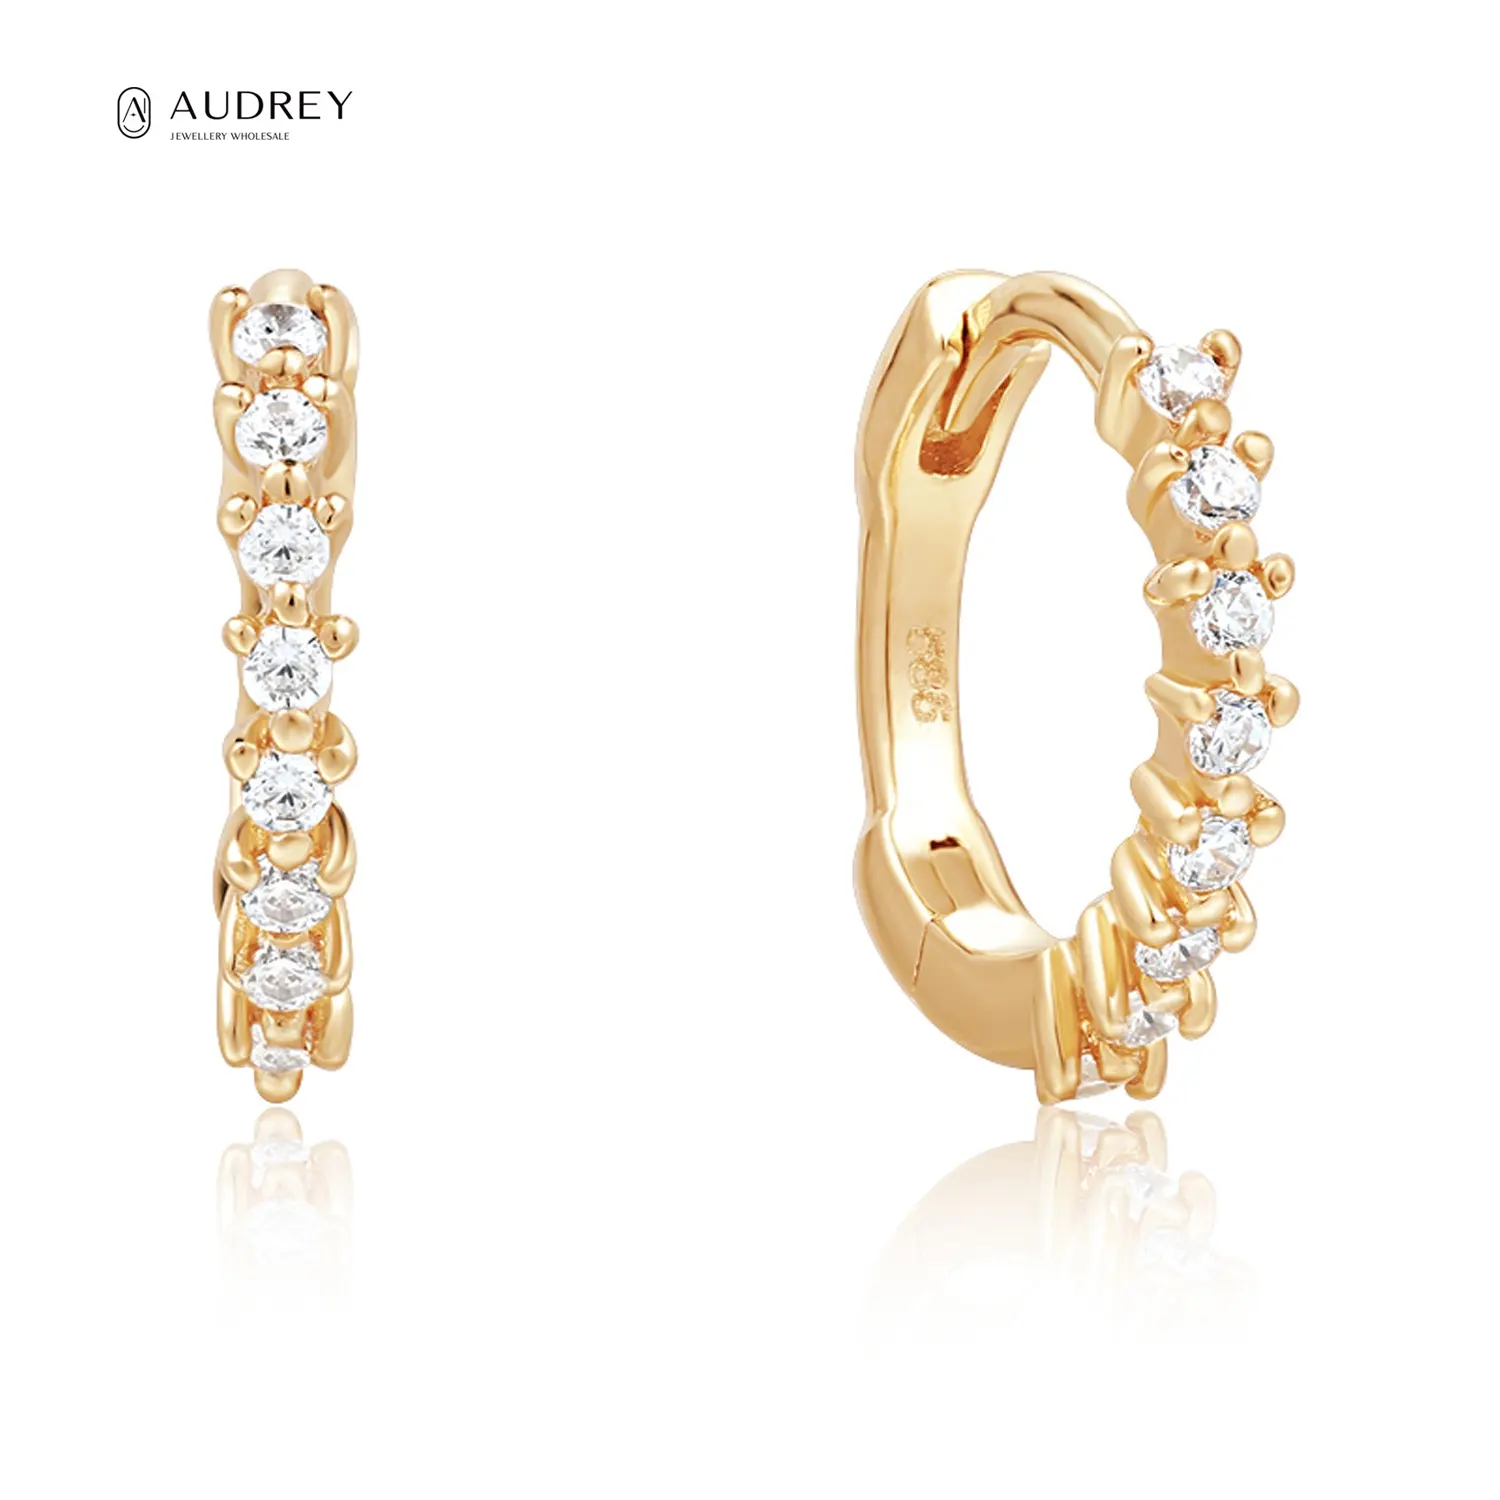 Audrey Designer Earrings Jewellery Popular Brands Full Diamond 14k Solid Gold Hoop Huggies Earring Jewelry For Women